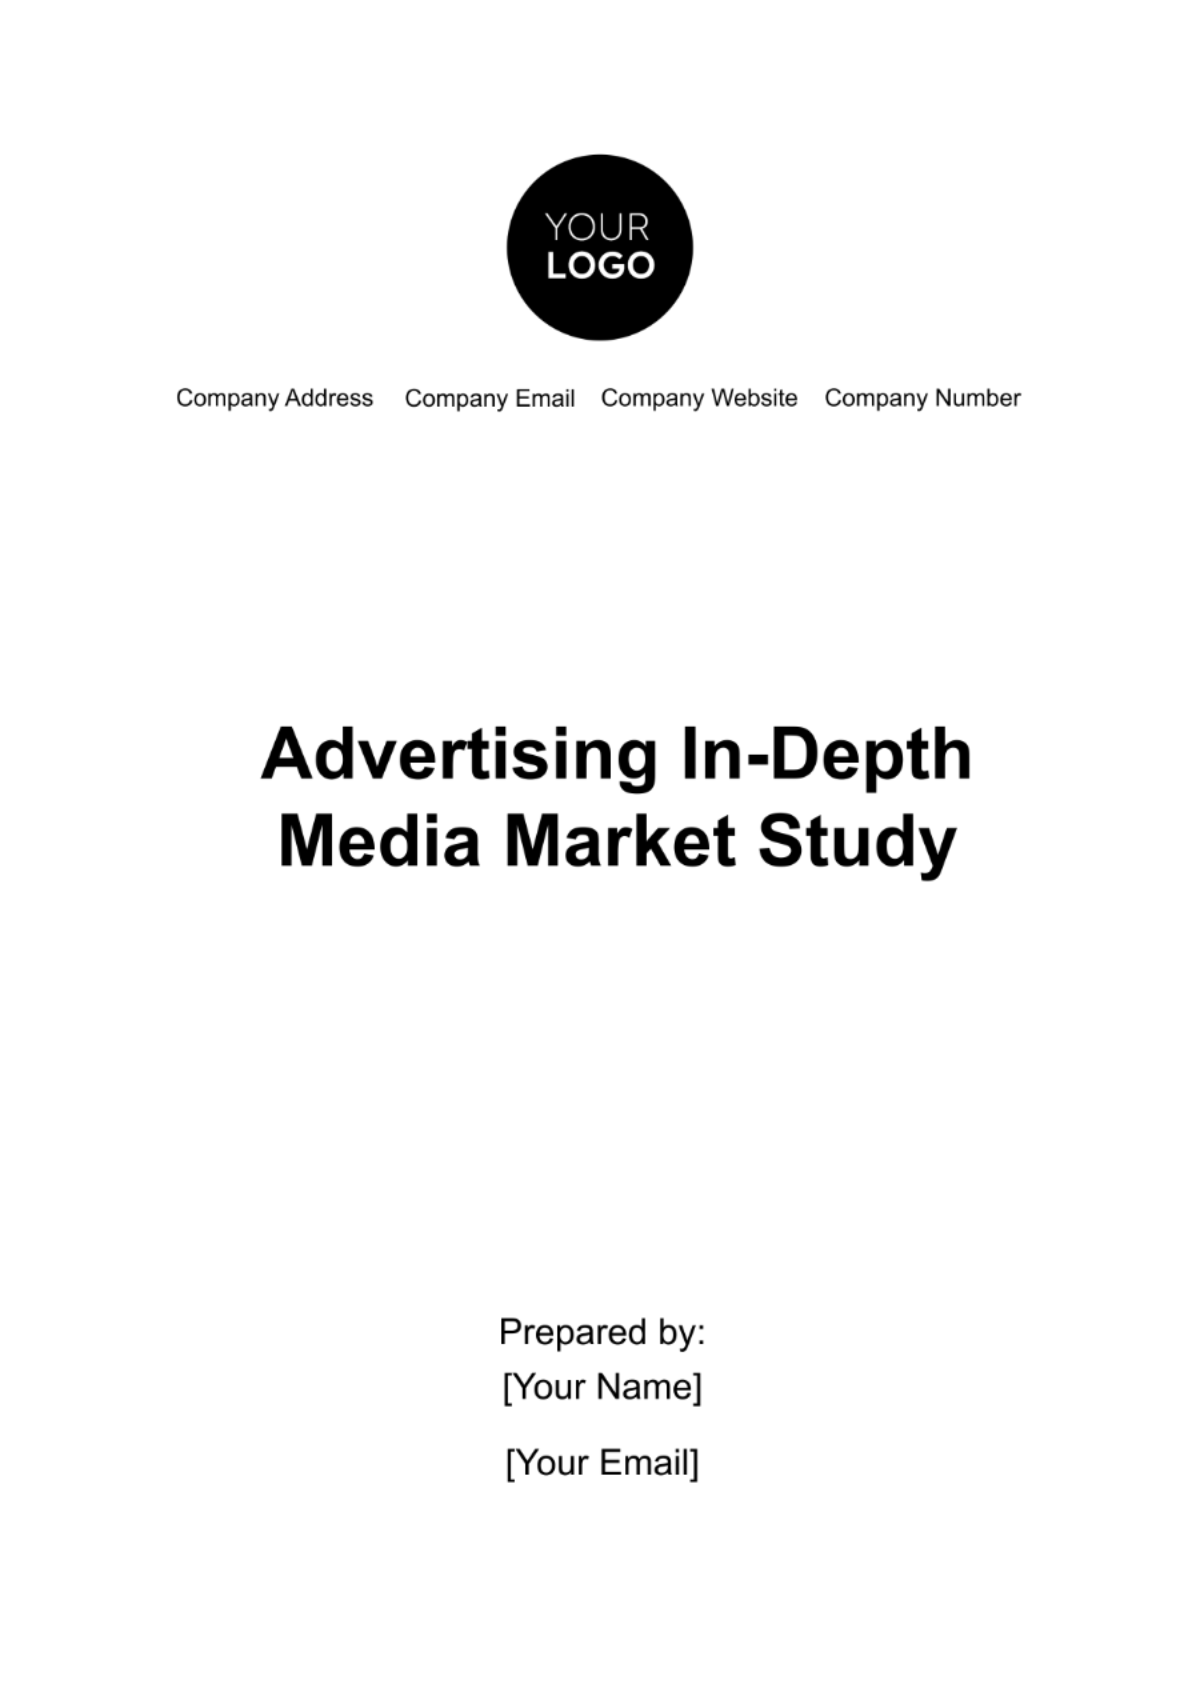 Advertising In-Depth Media Market Study Template